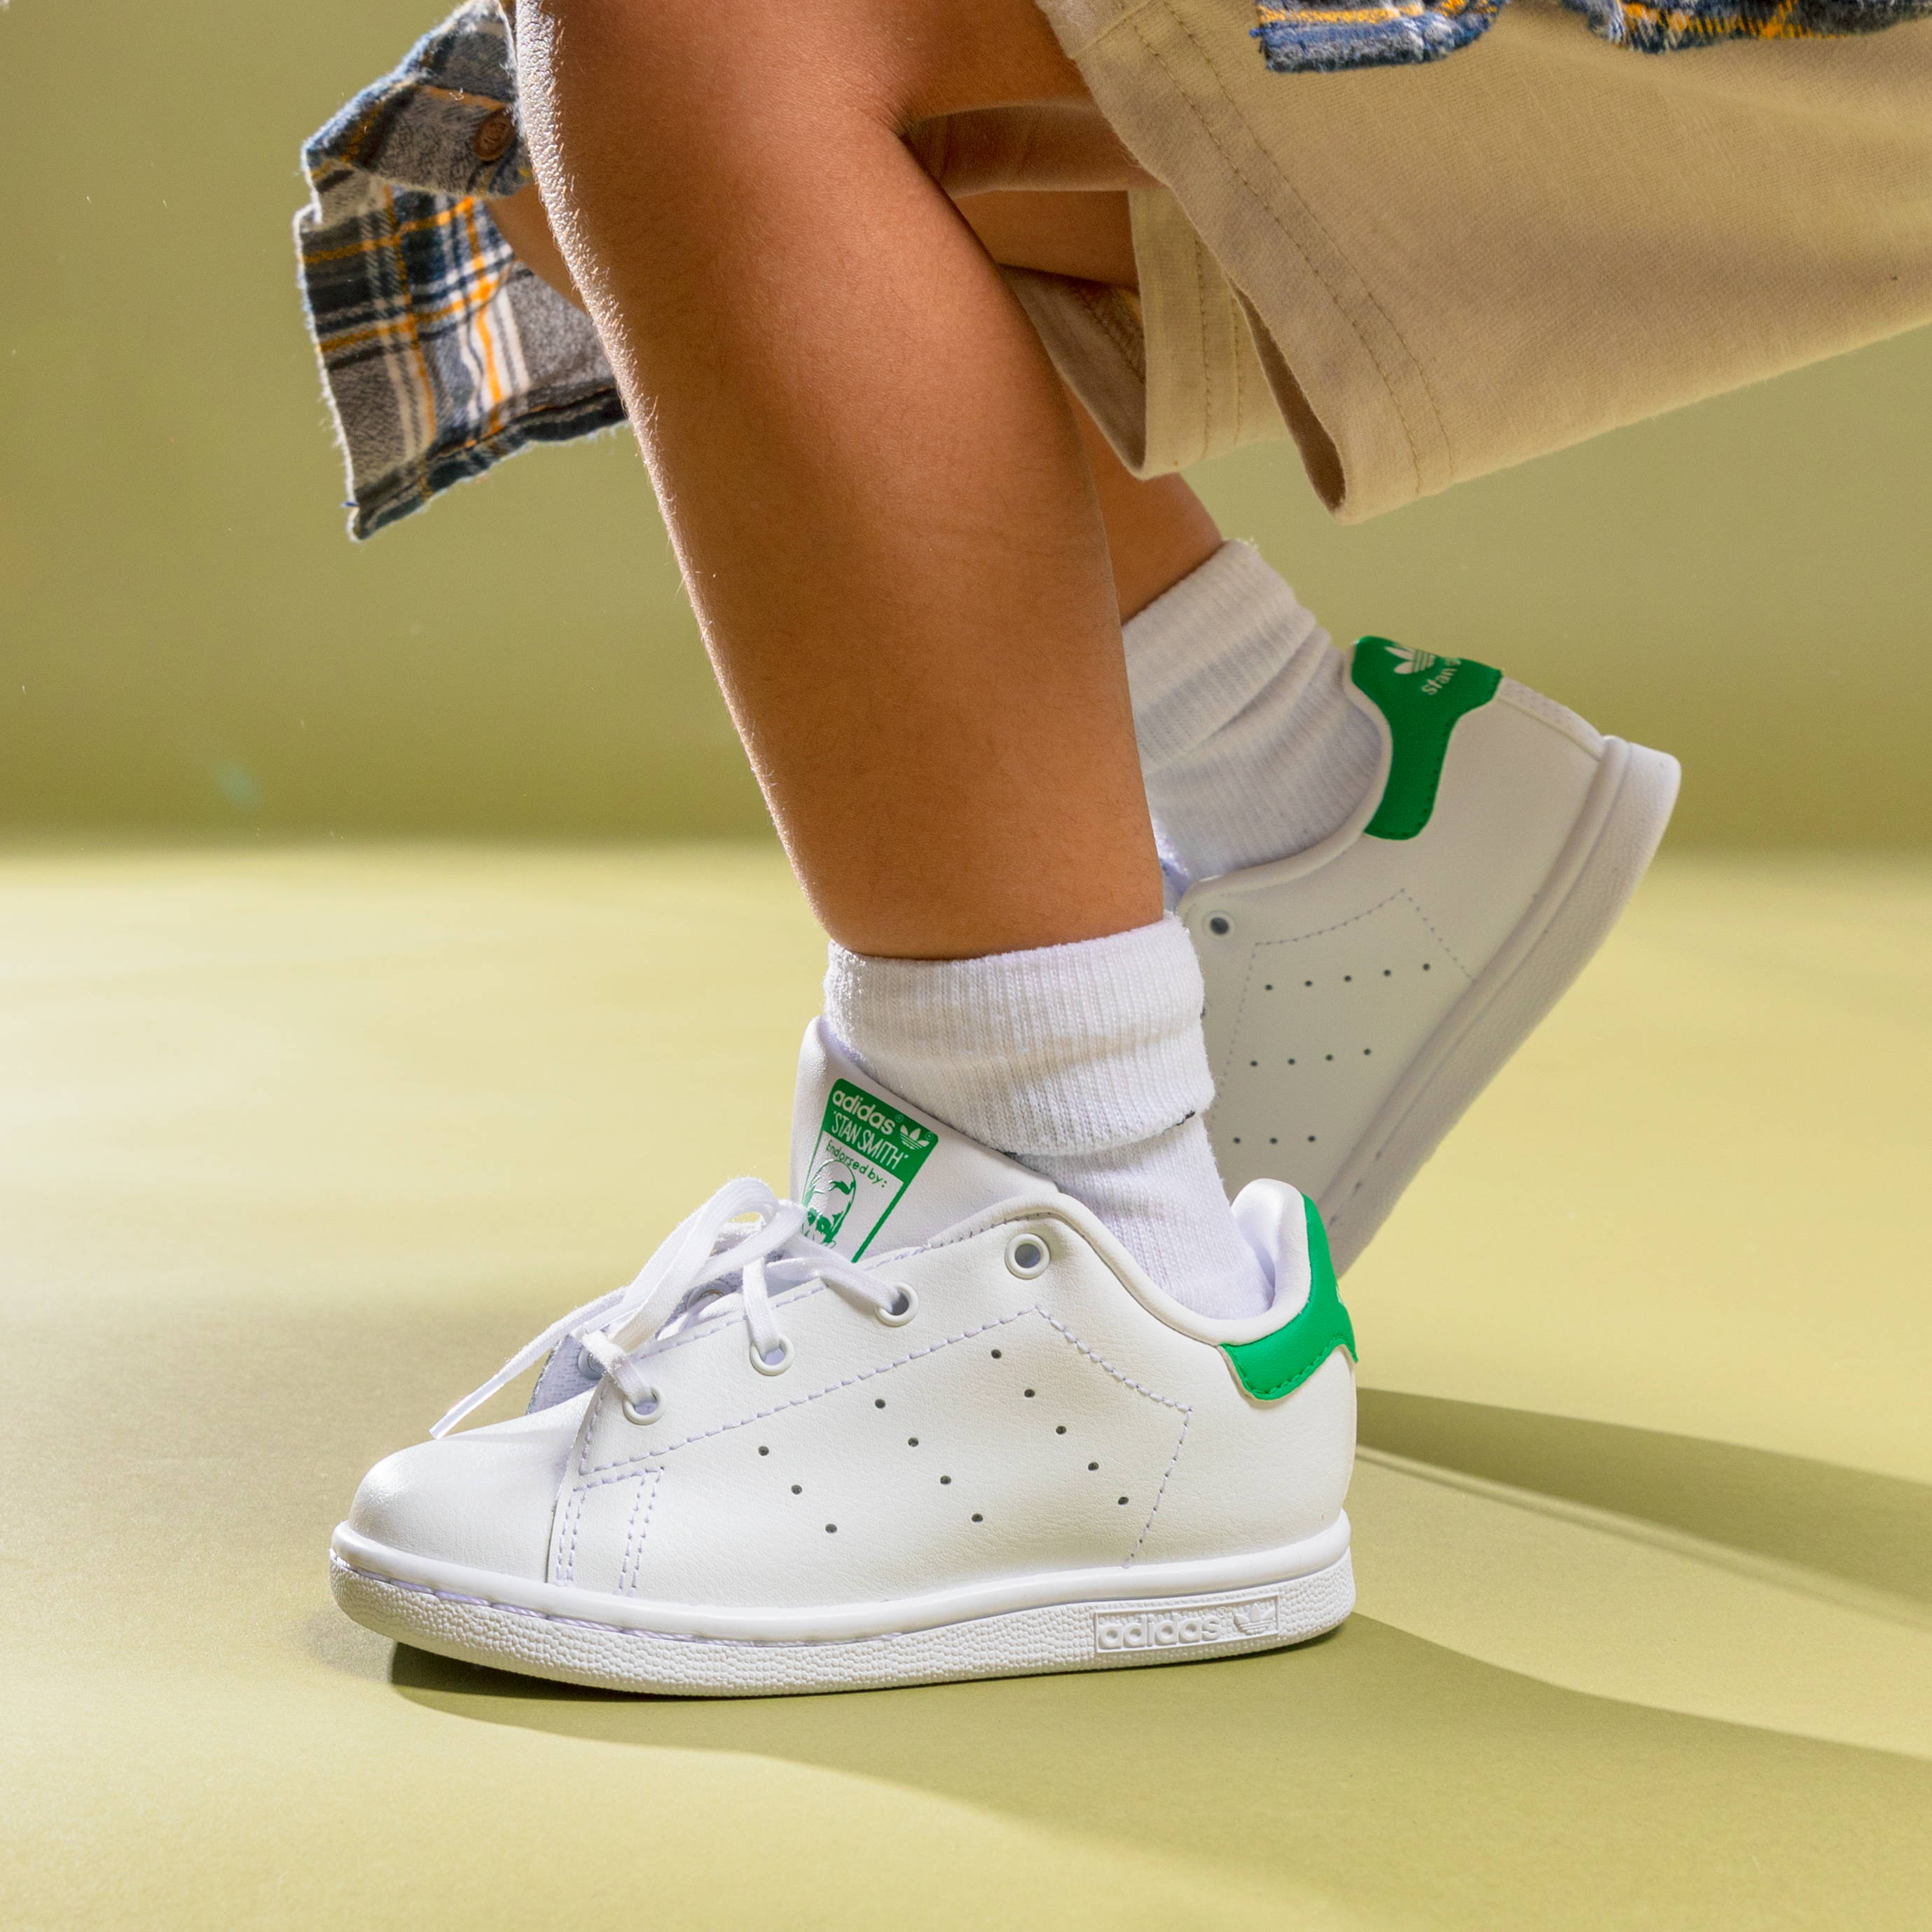 adidas stan smith on child's feet